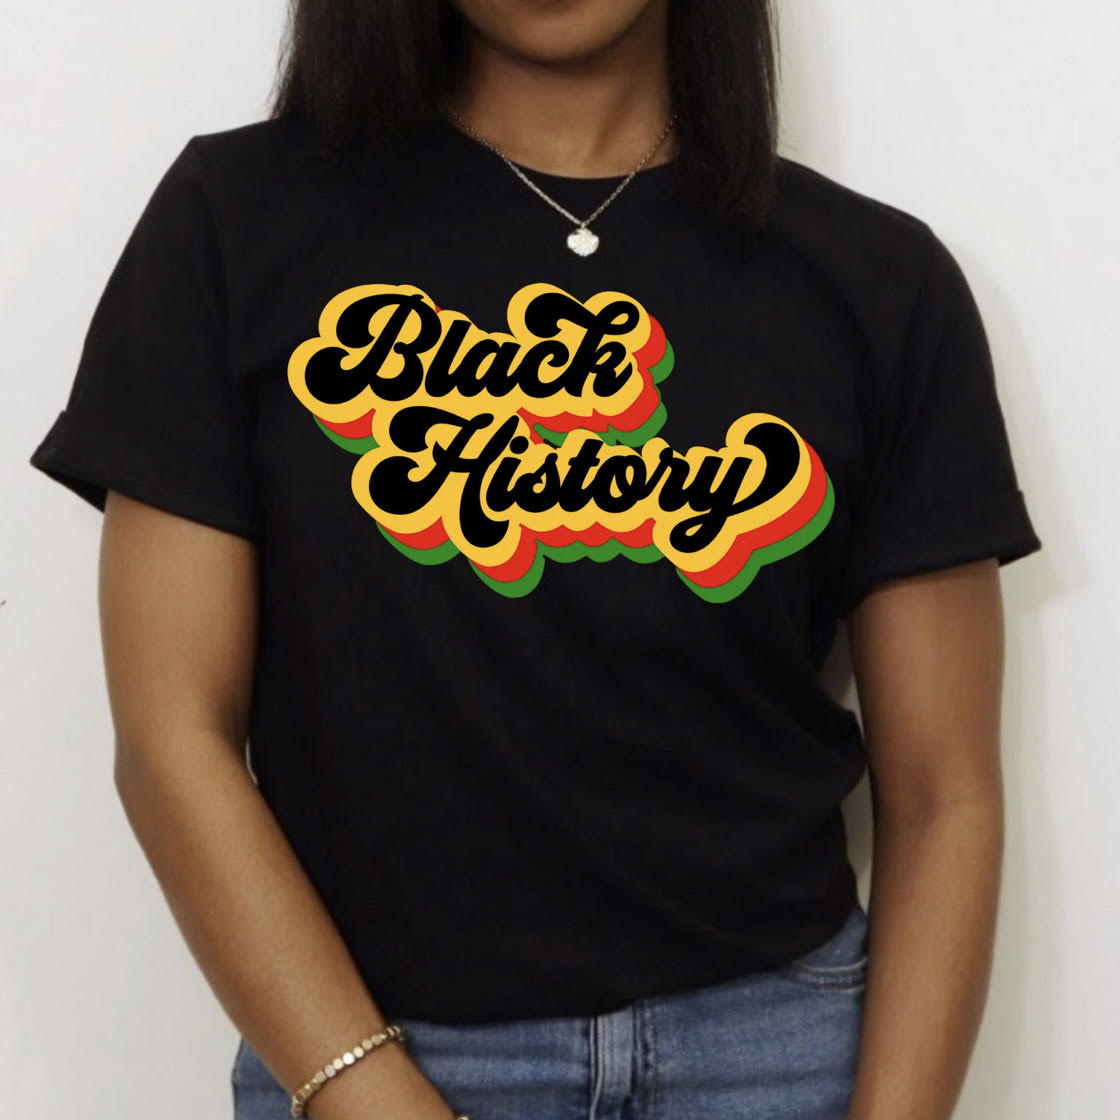 Retro Black History